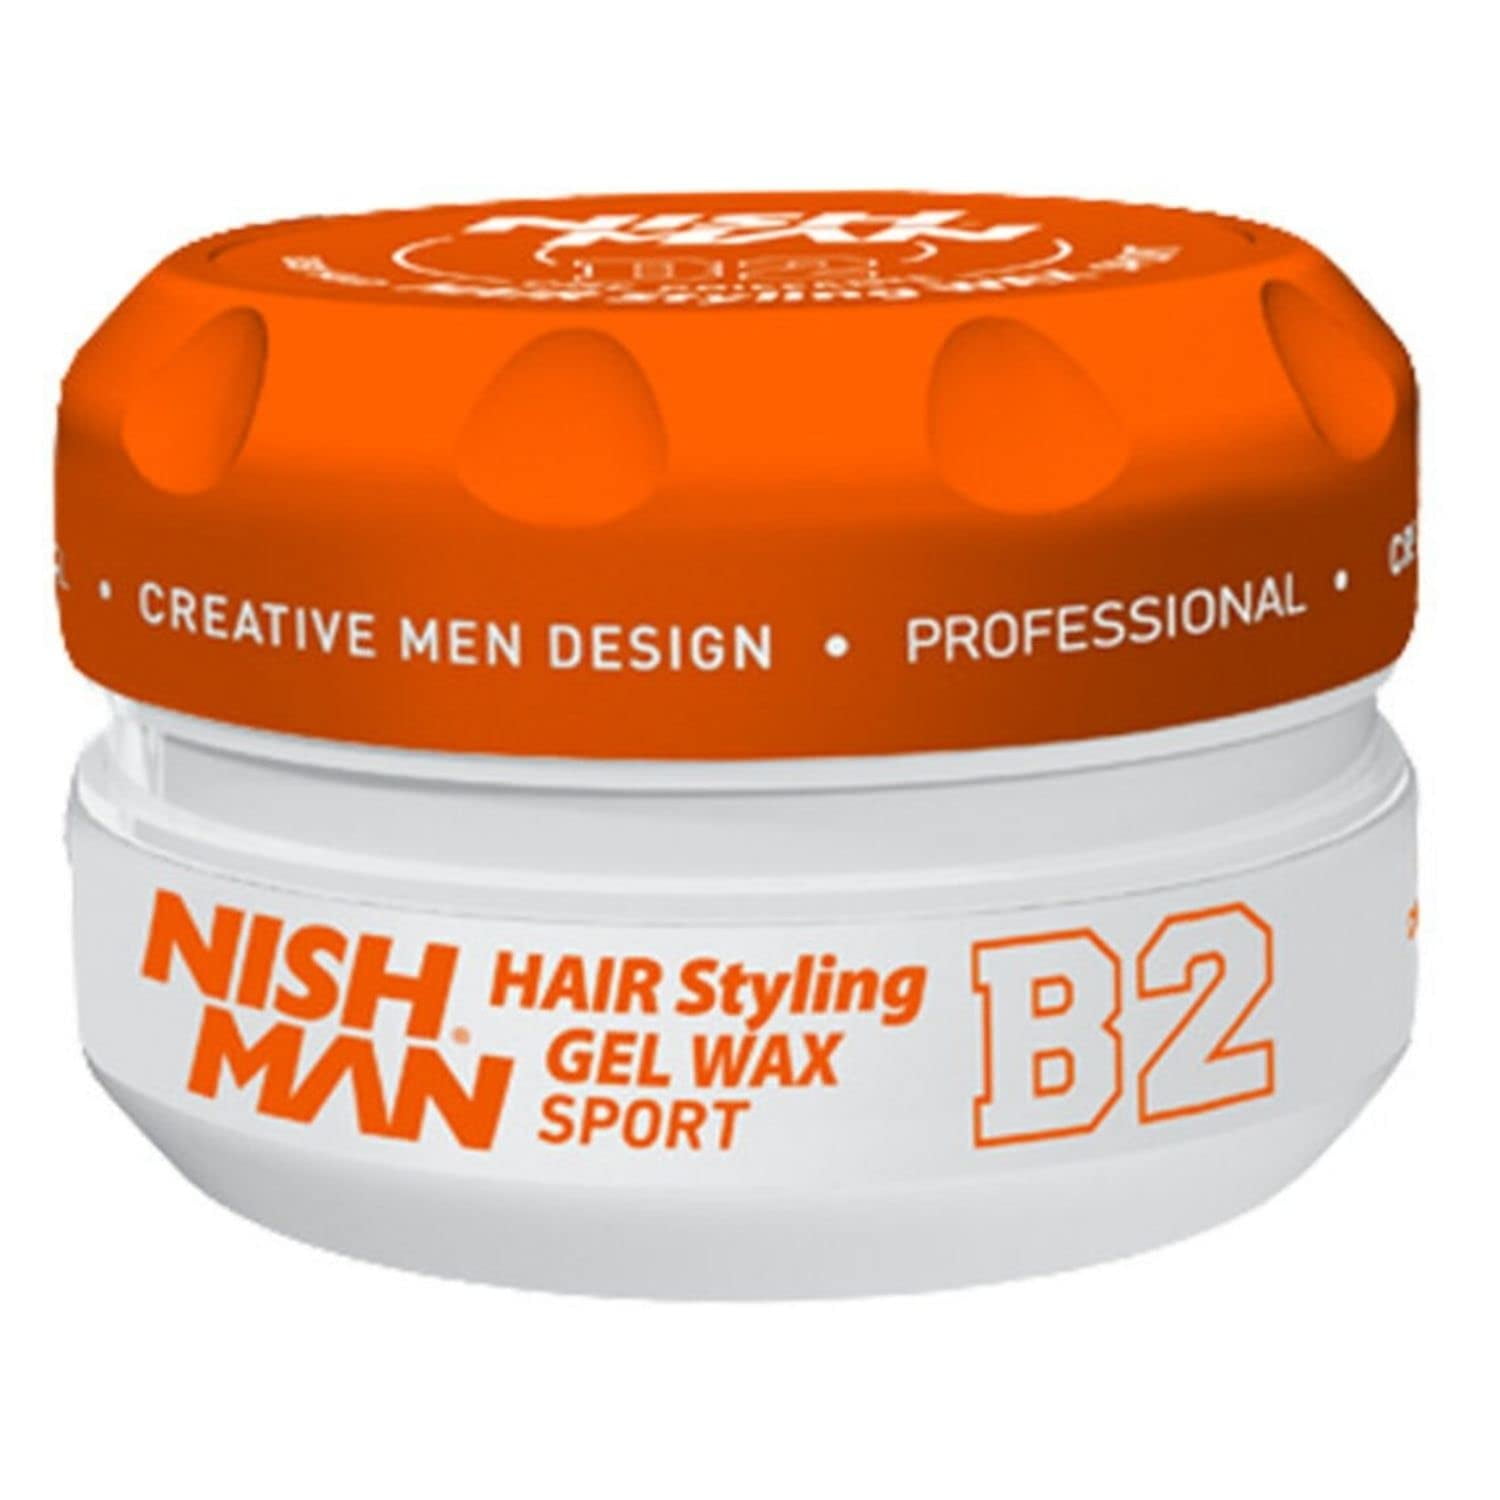 Buy Nishman Hair Styling Spider Wax Tarantula 100g: Web Effect, Volume, Shine Hair Style